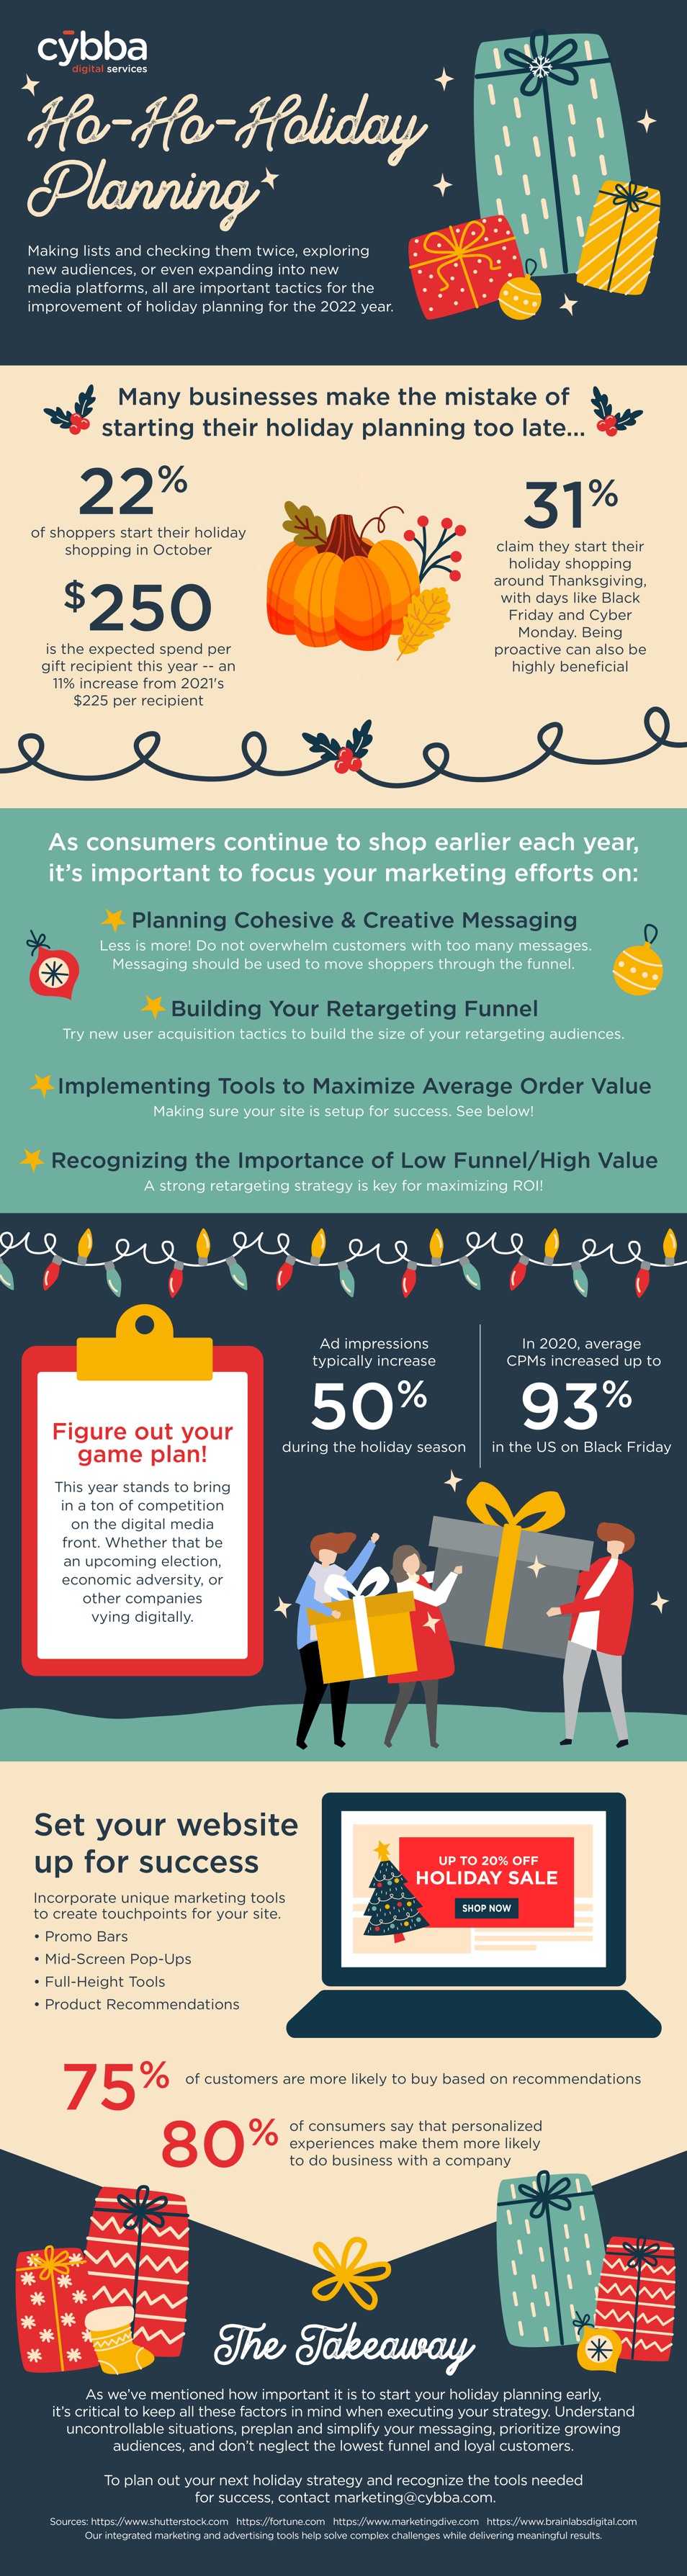 HolidayPlanning_Infographic_CJ3-1